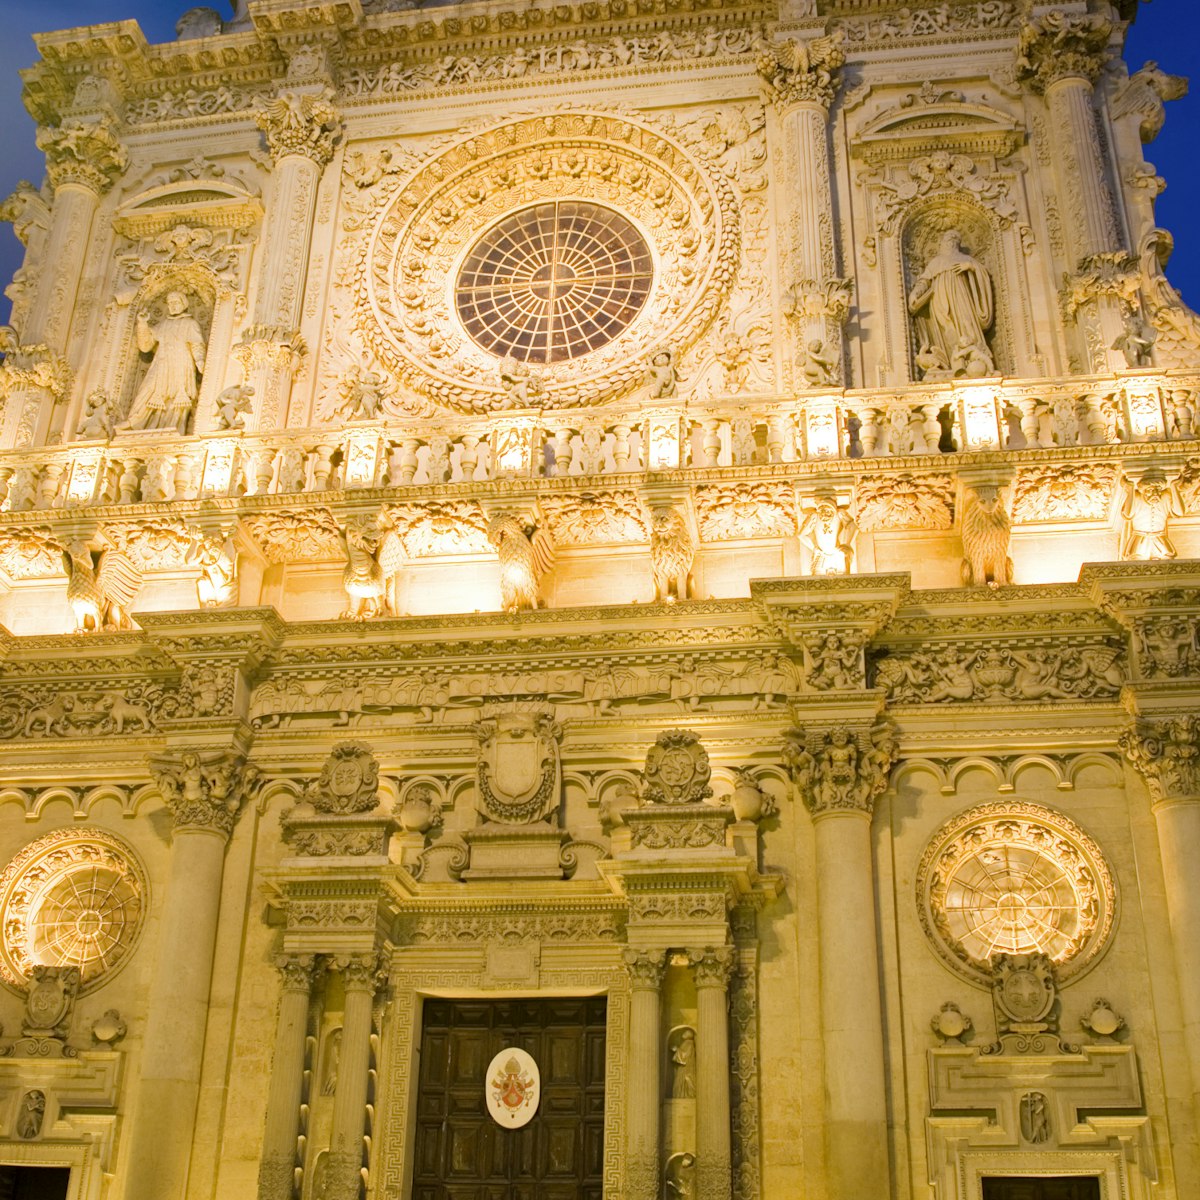 Baroque facade of Basilica di Santa Croce.